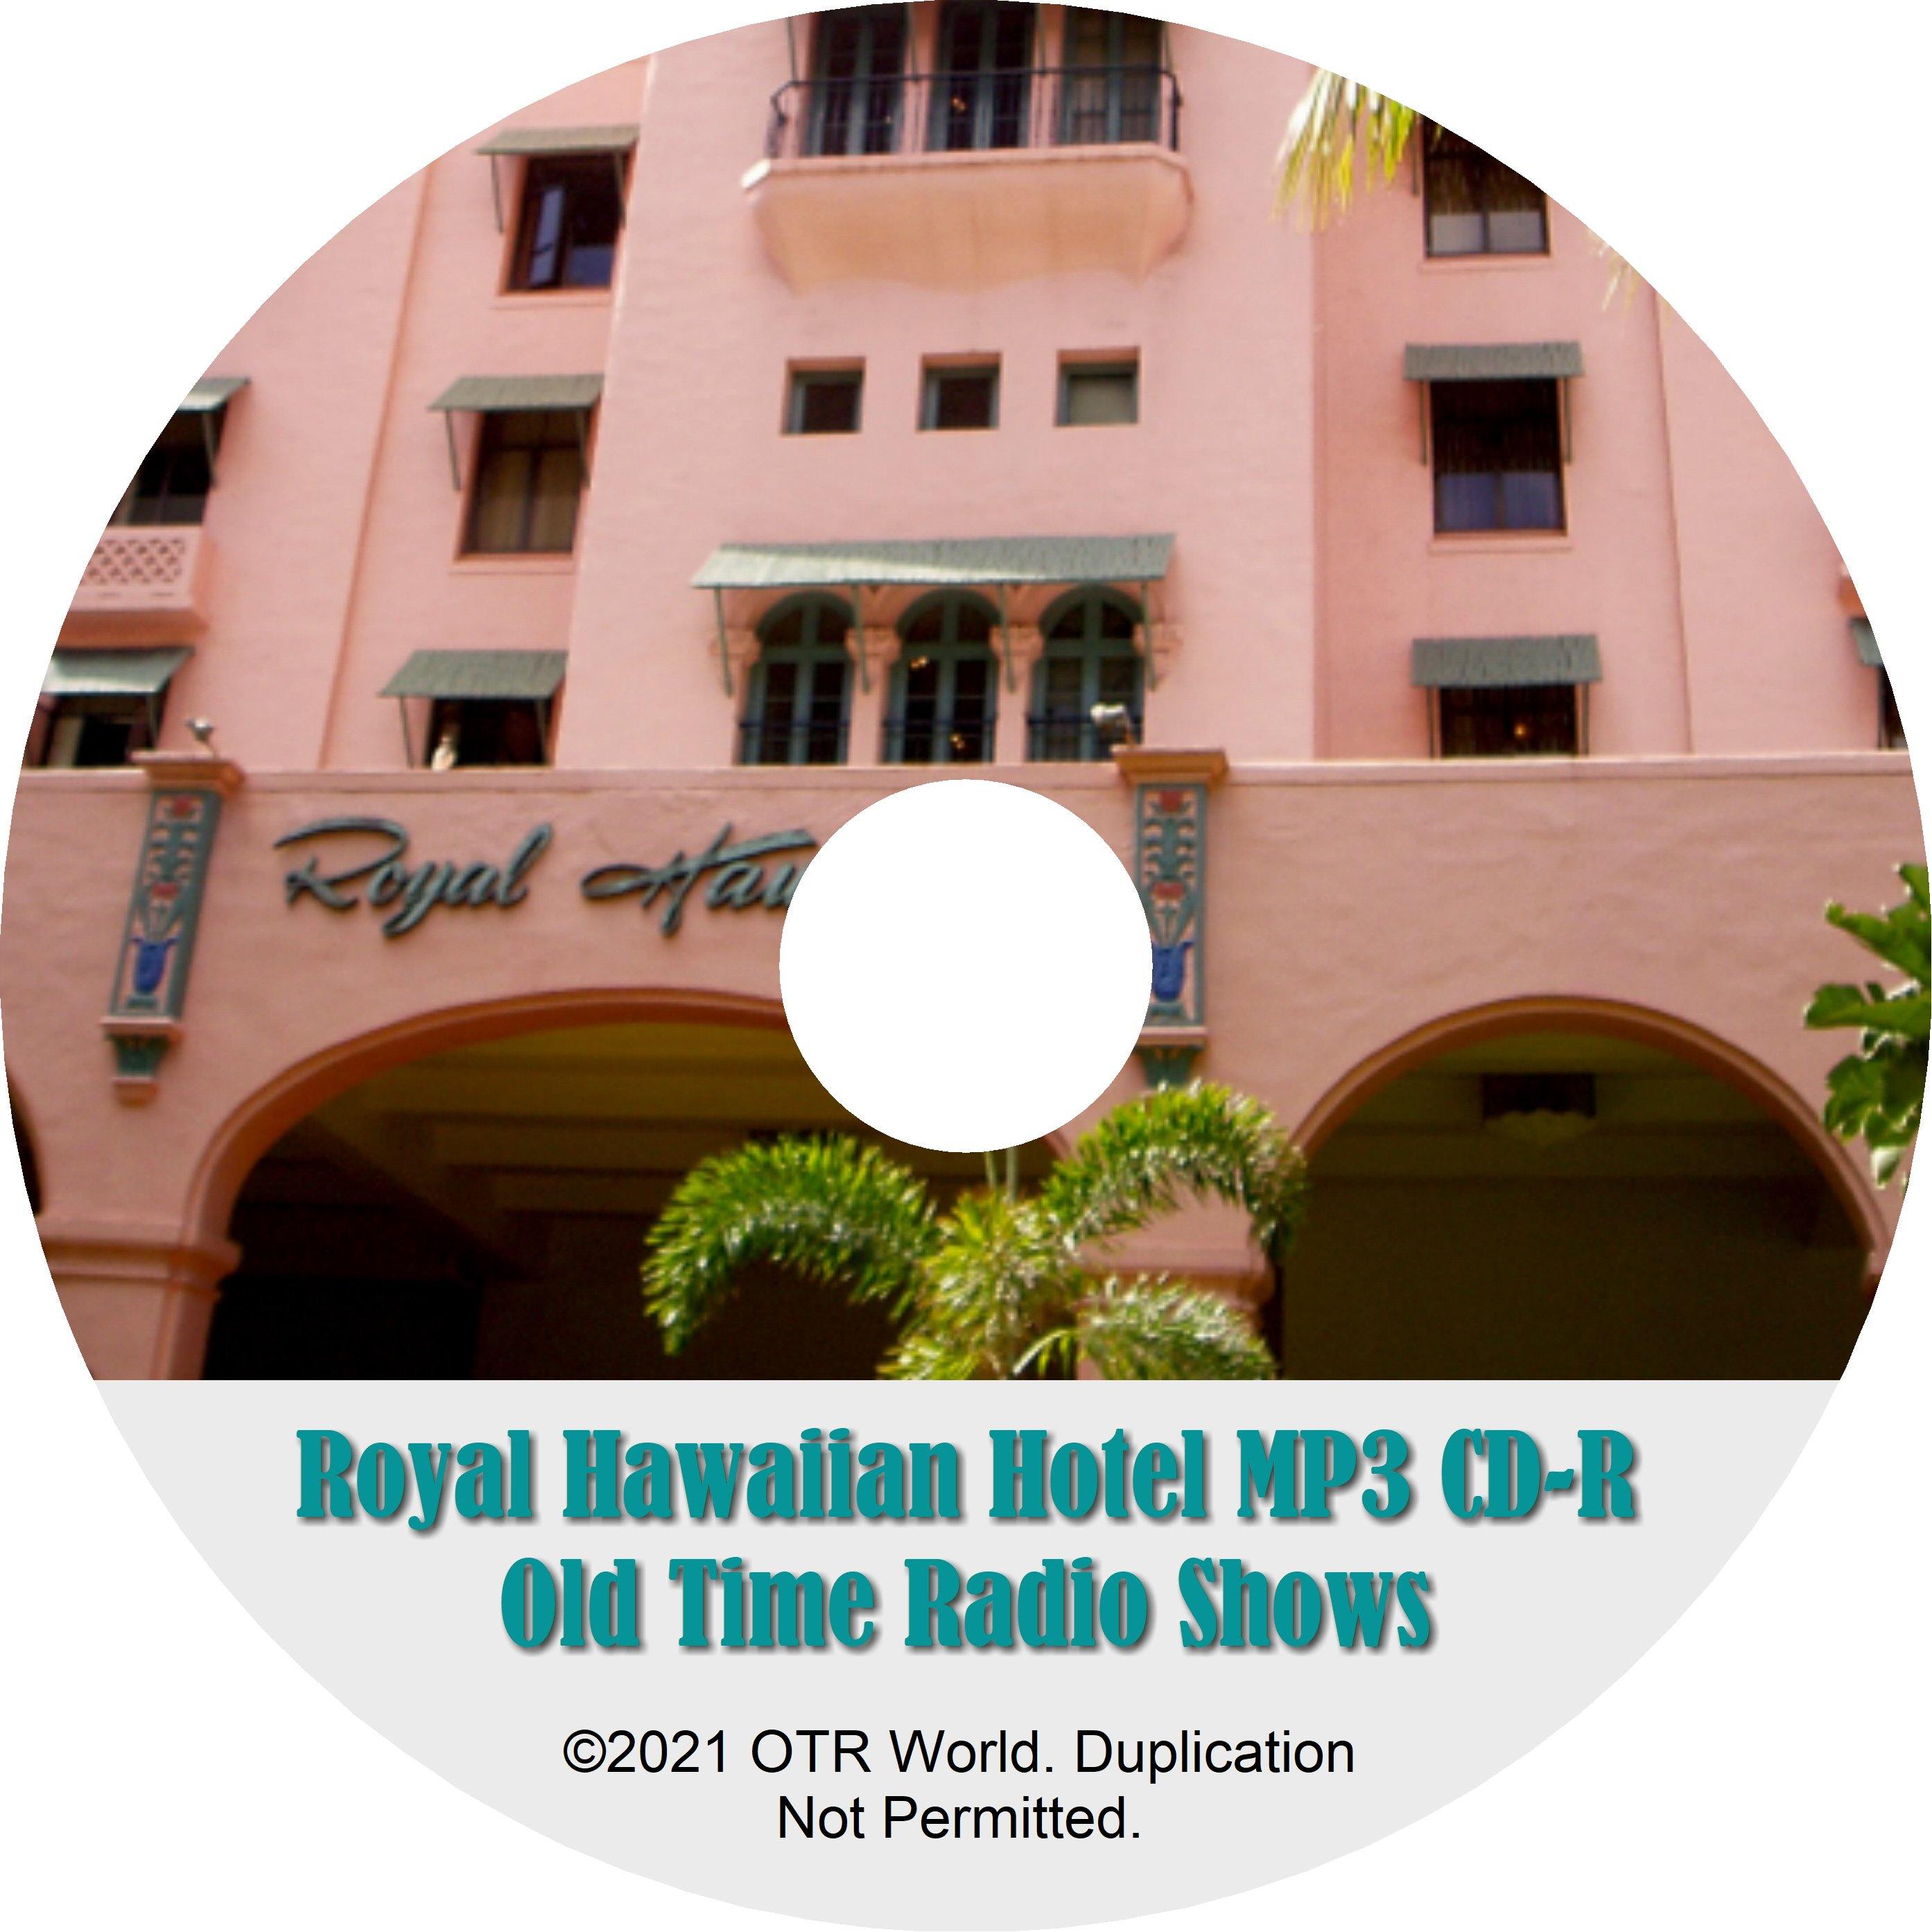 Royal Hawaiian Hotel OTR OTRS Old Time Radio Shows MP3 On CD-R 8 Episodes - OTR World